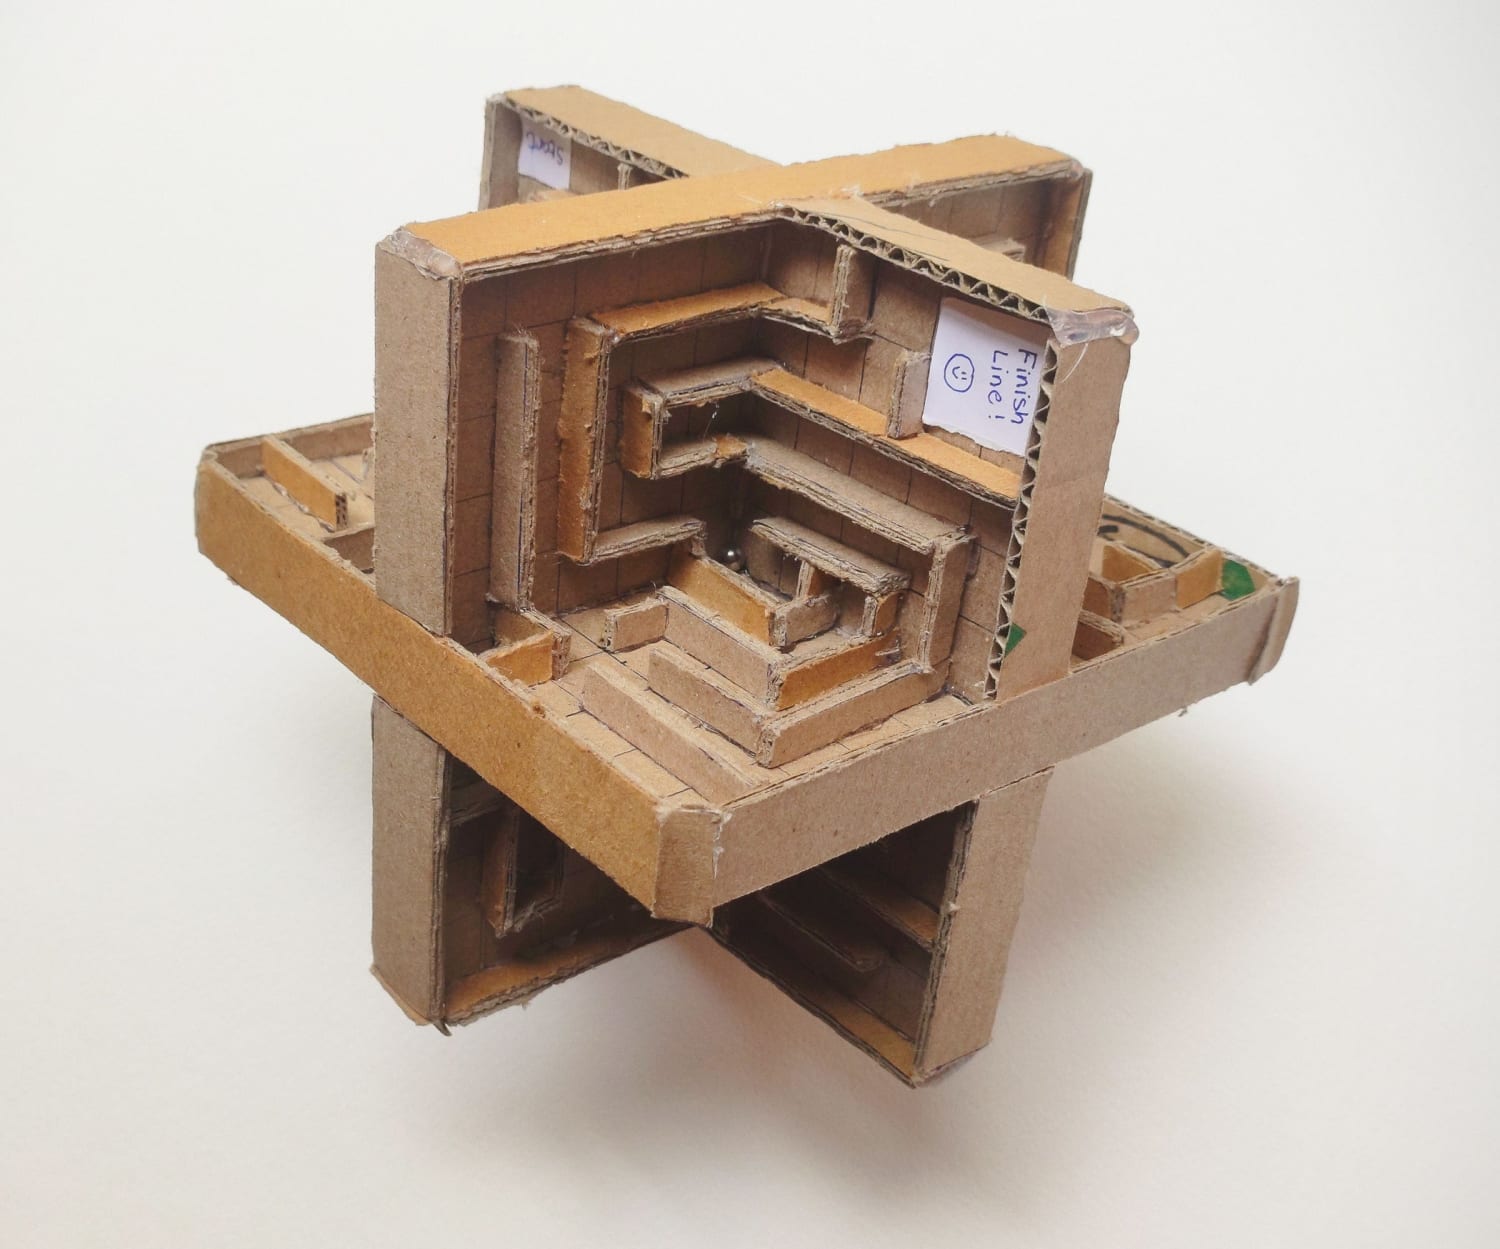 3D Cardboard Labyrinth Maze